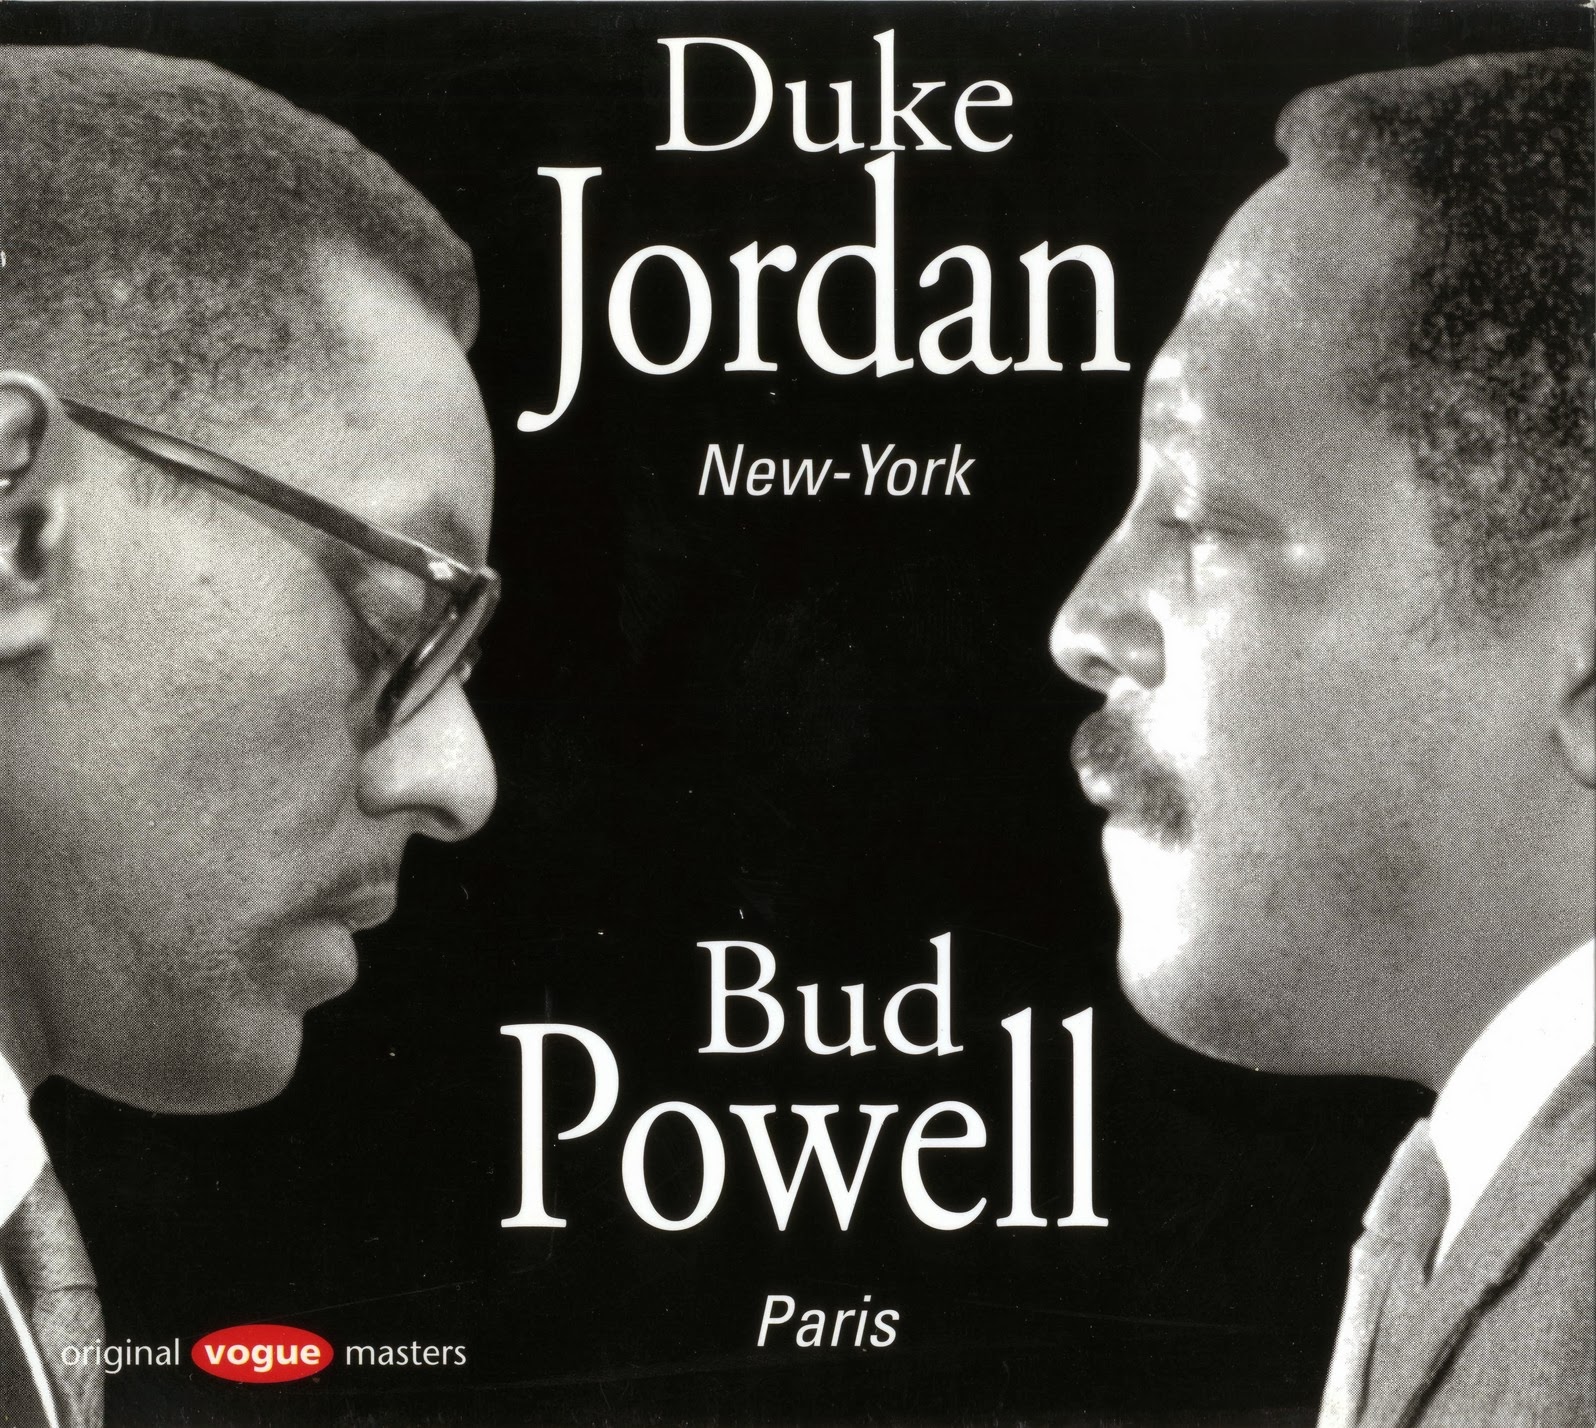 DUKE JORDAN - New York Paris cover 